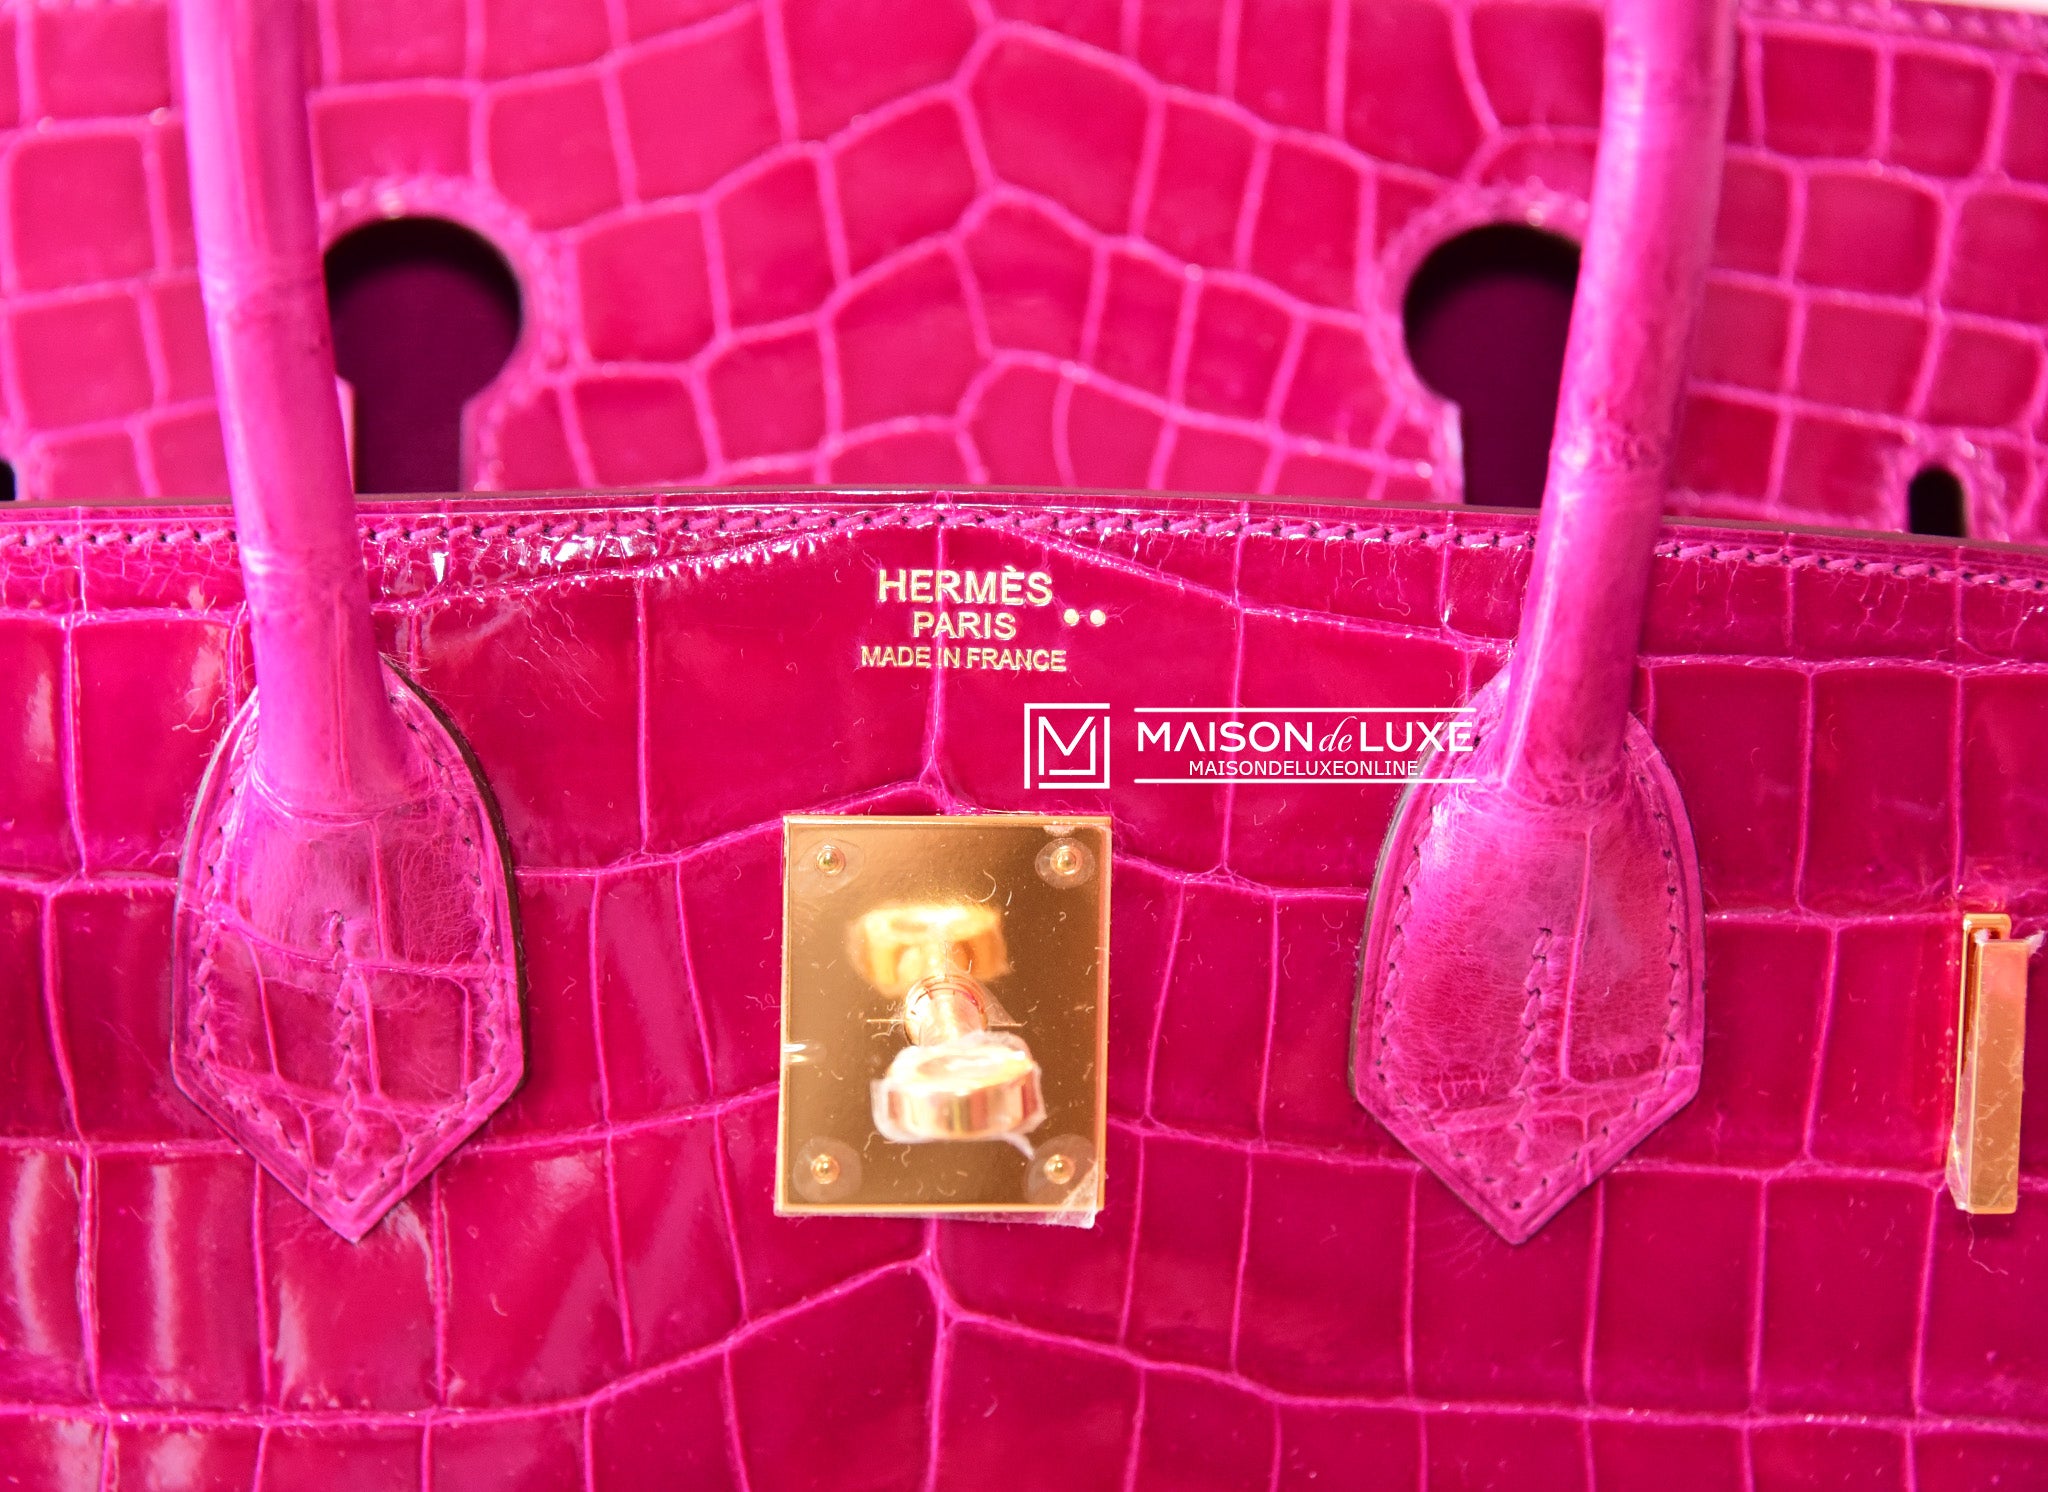 Birkin Travel Bag - Pink Crocodile – Ascot Shoes